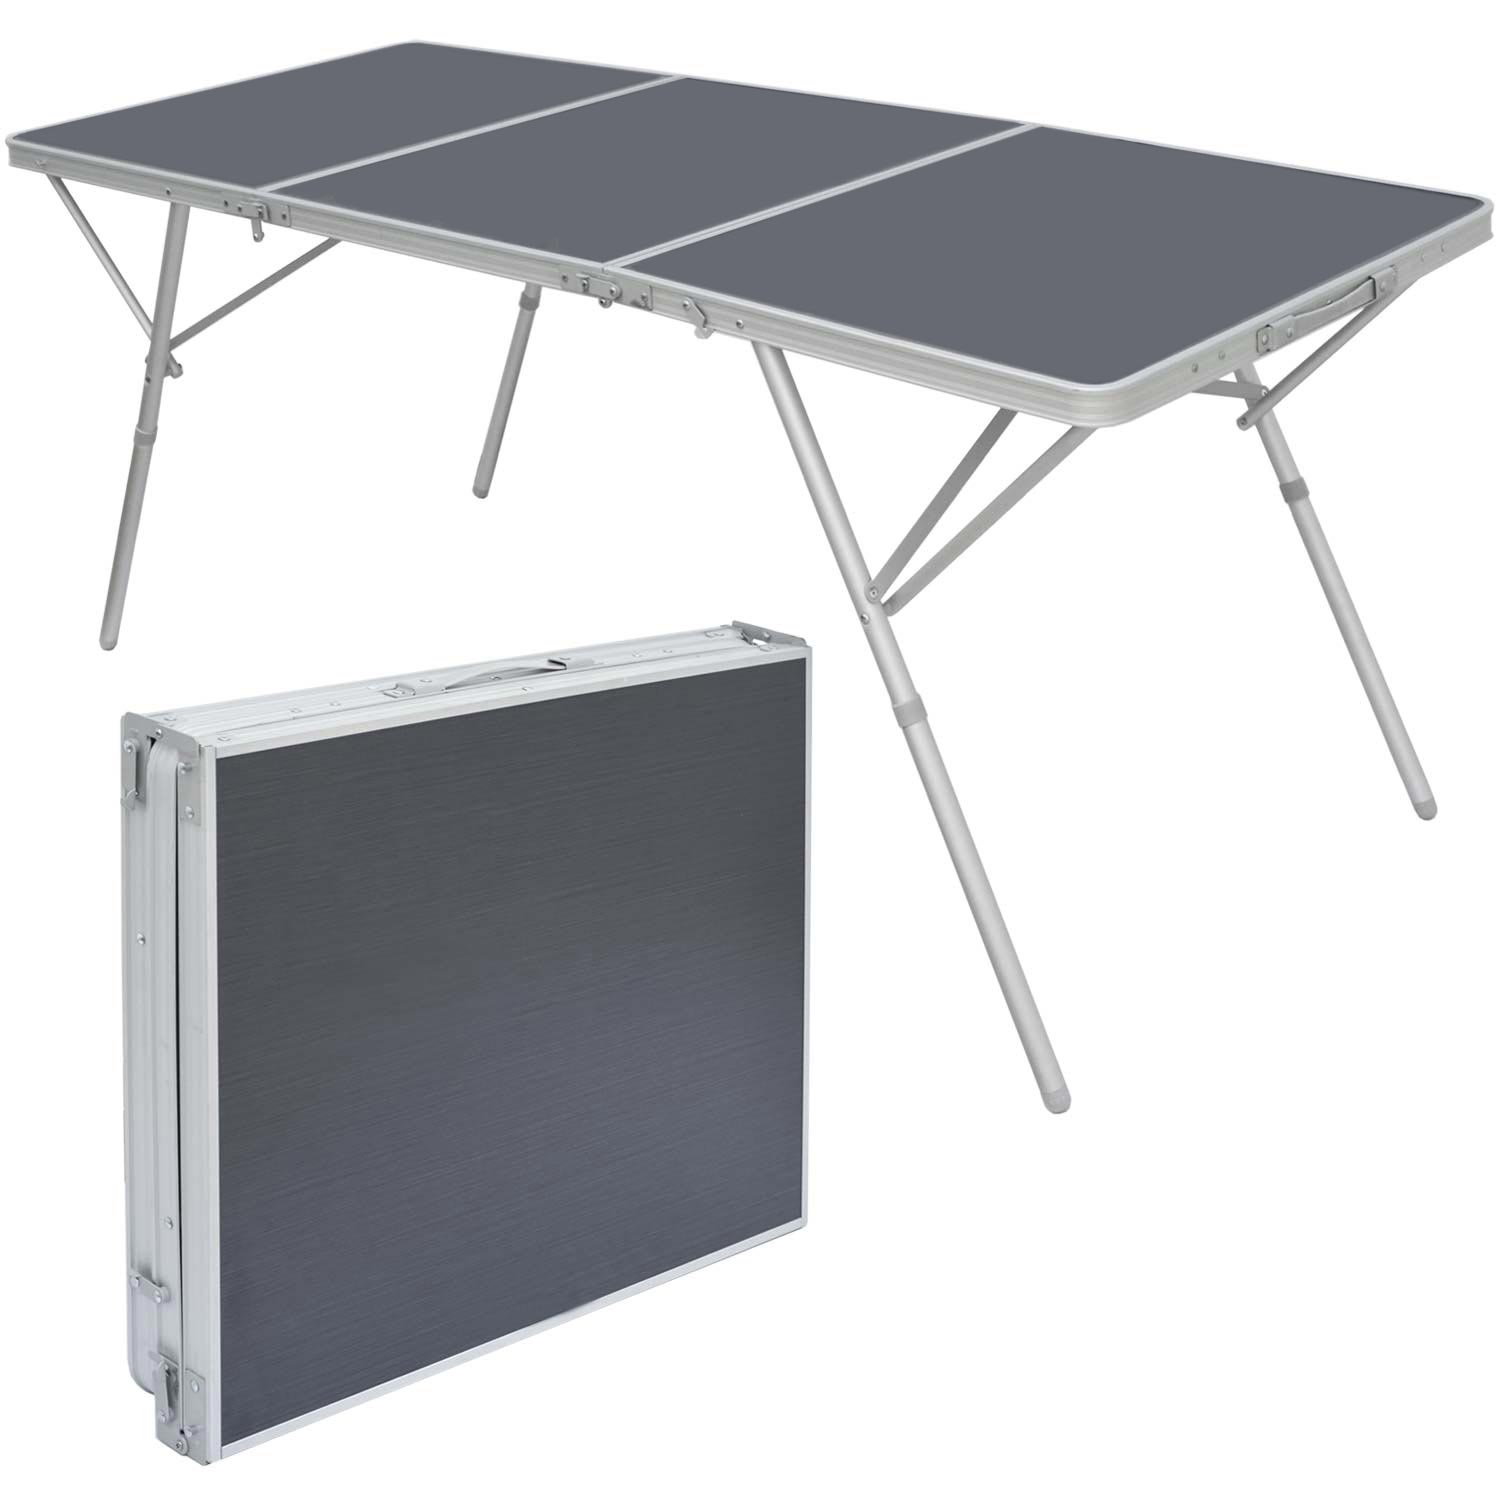 Campingtisch klappbar Gartentisch Aluminium Stabil Wasserdicht tragbar Rolltisch 